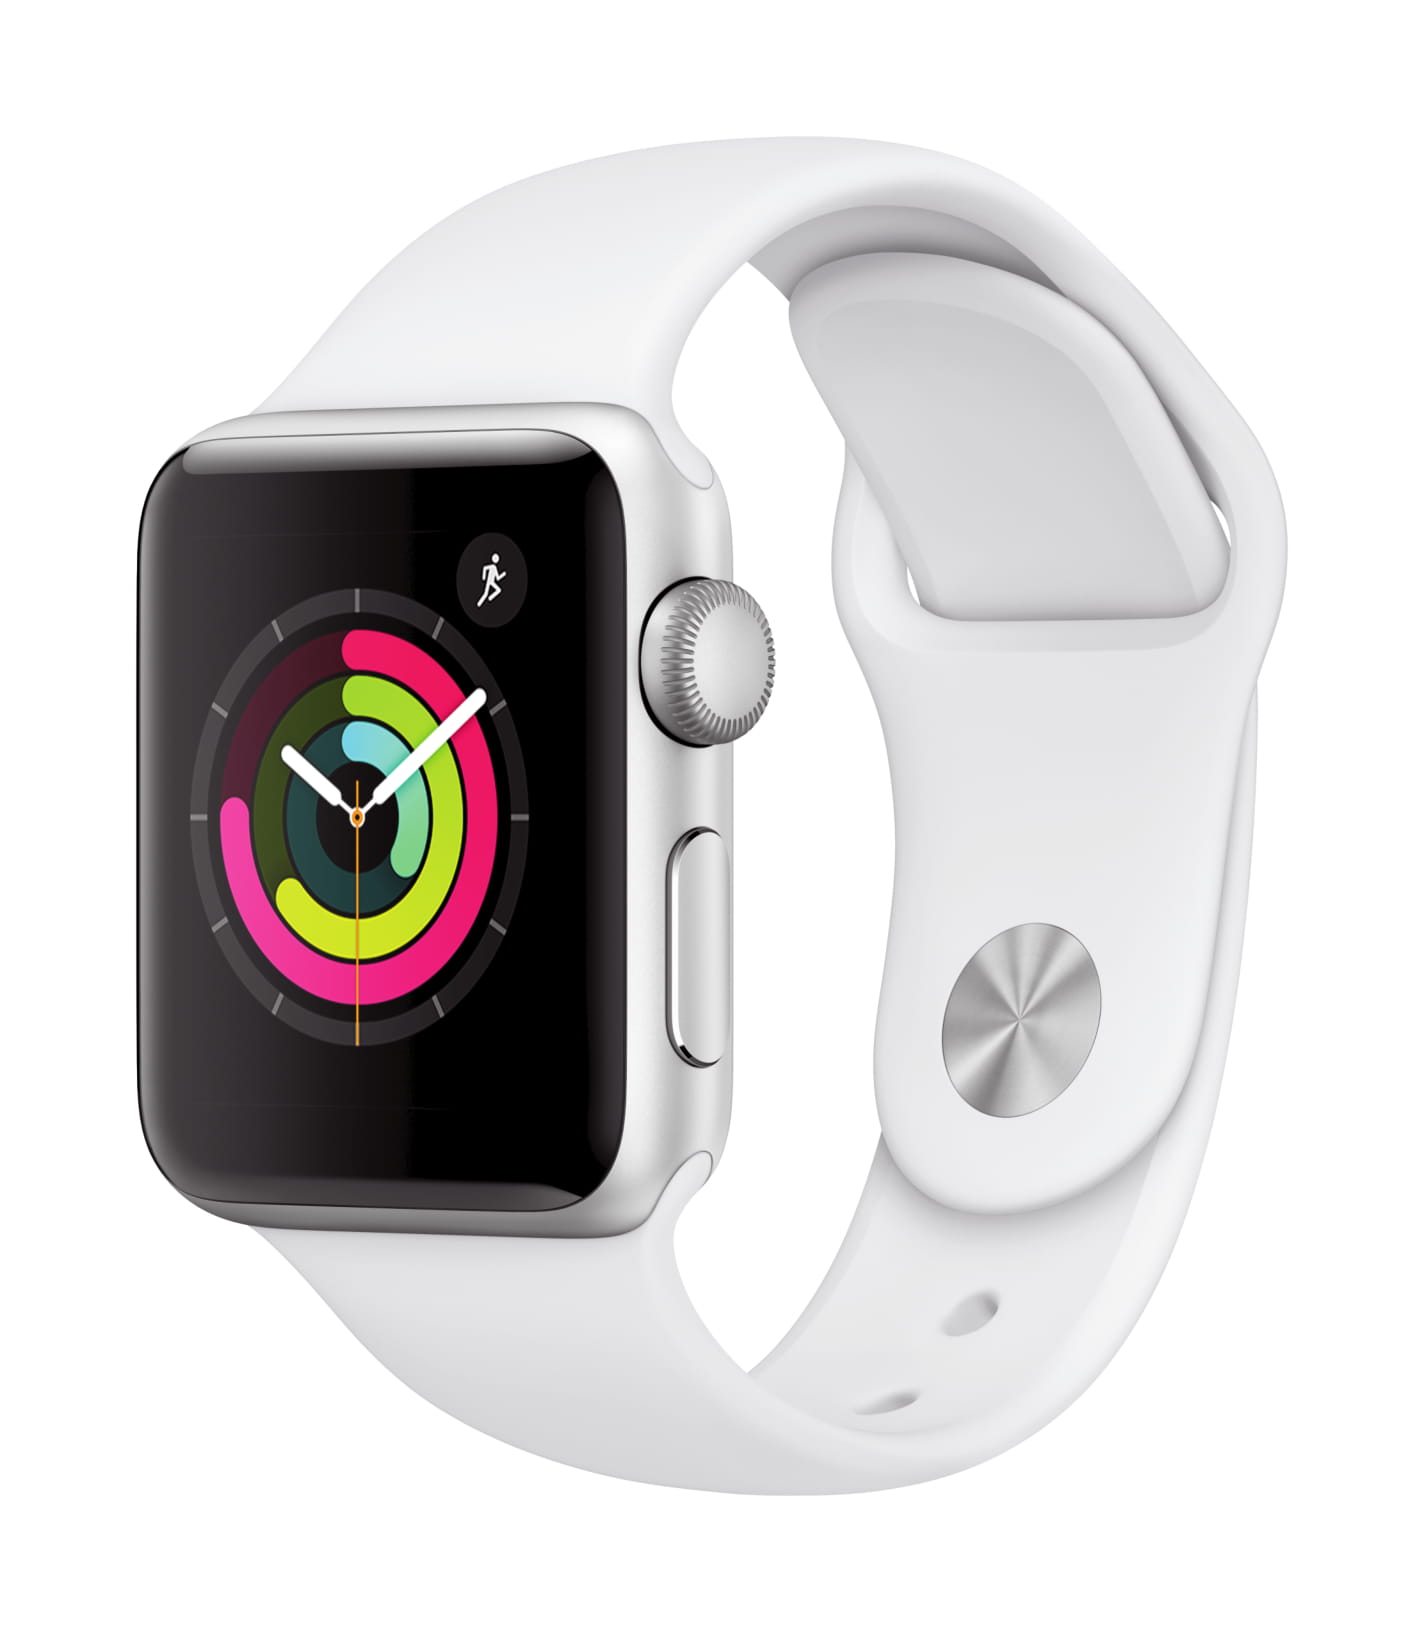 Apple Watch Series 3 w/ Sport Band (White, Black): 38mm $159, 42mm $189